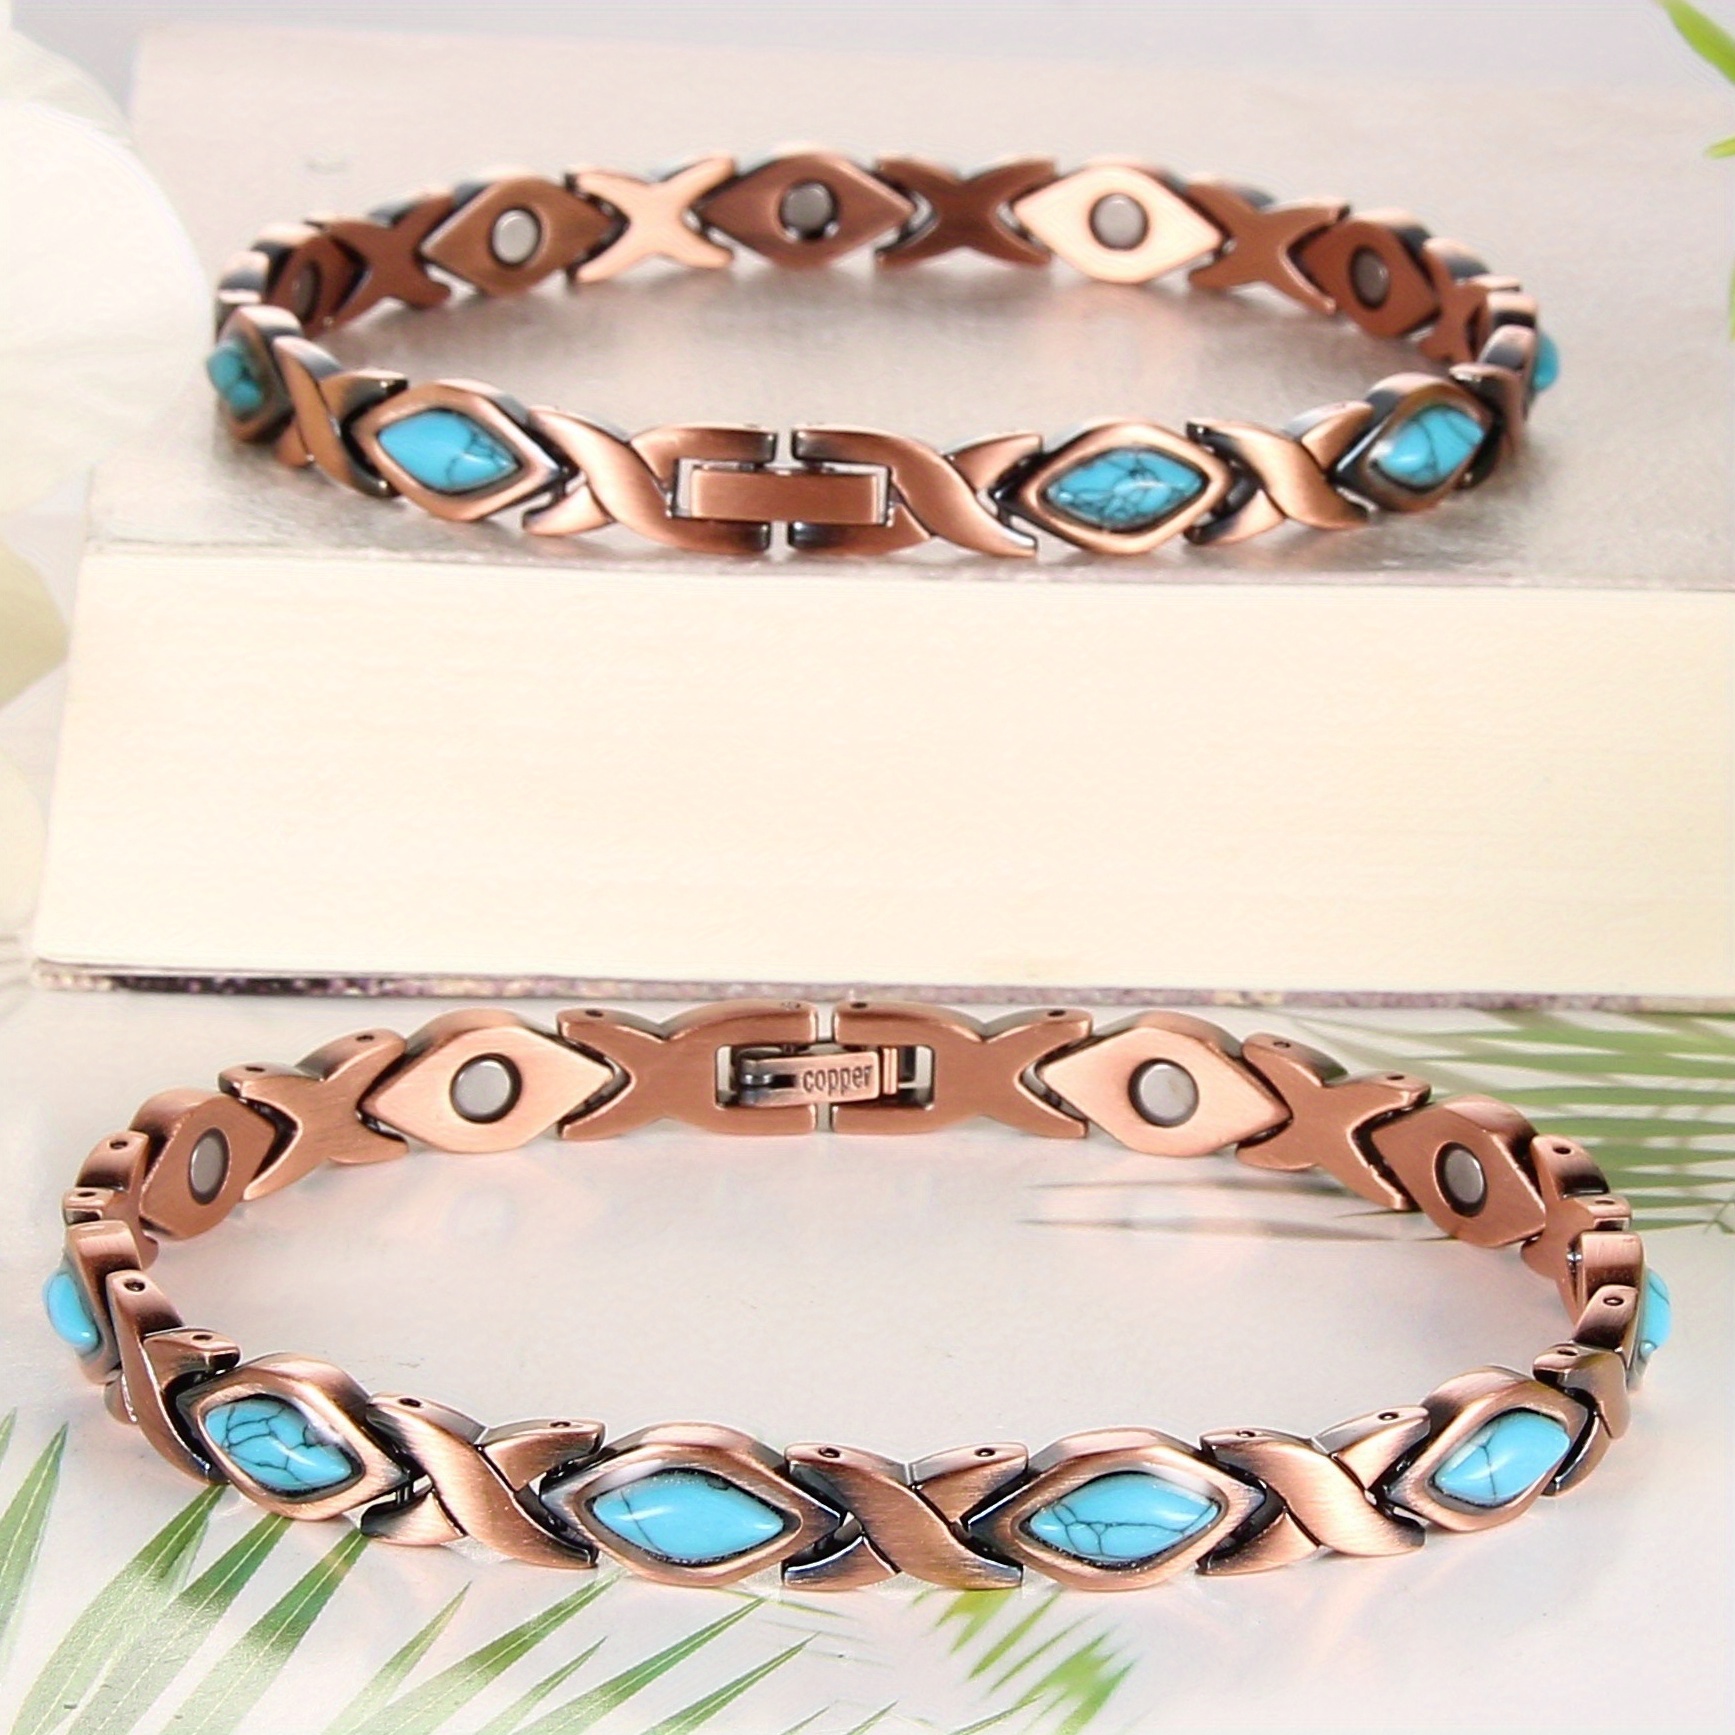 

1pc, Gorgeous And Elegant, Copper Bracelet For Women, Copper Magnetic Bracelet 3500 Gauss Magnetic Copper Bracelet For Women, Adjustable Length, Shipped In Gift Box